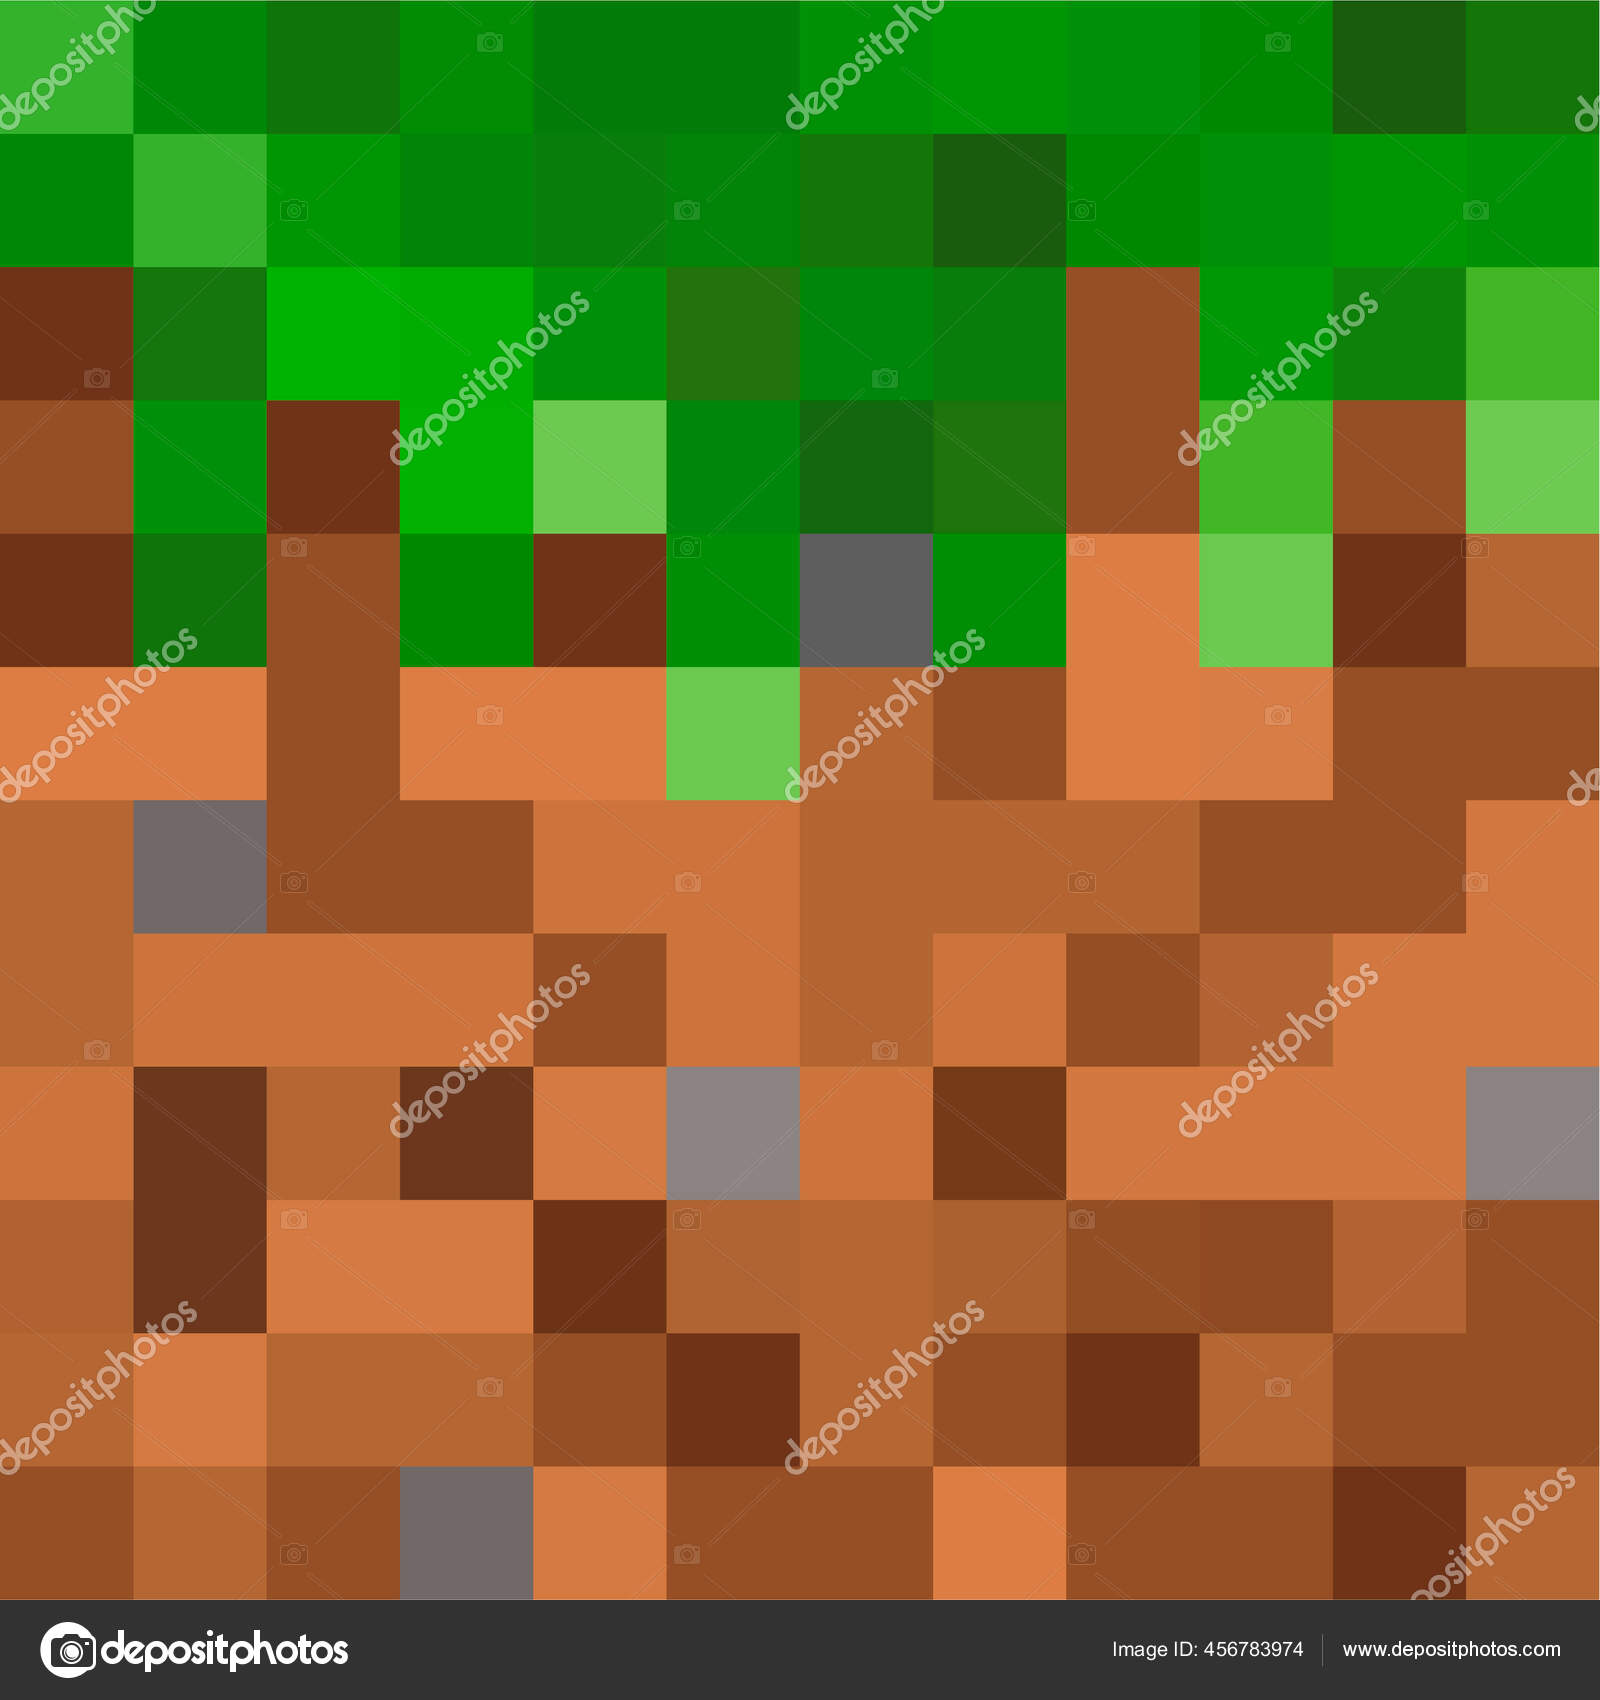 Pixel minecraft style land block background Vector Image